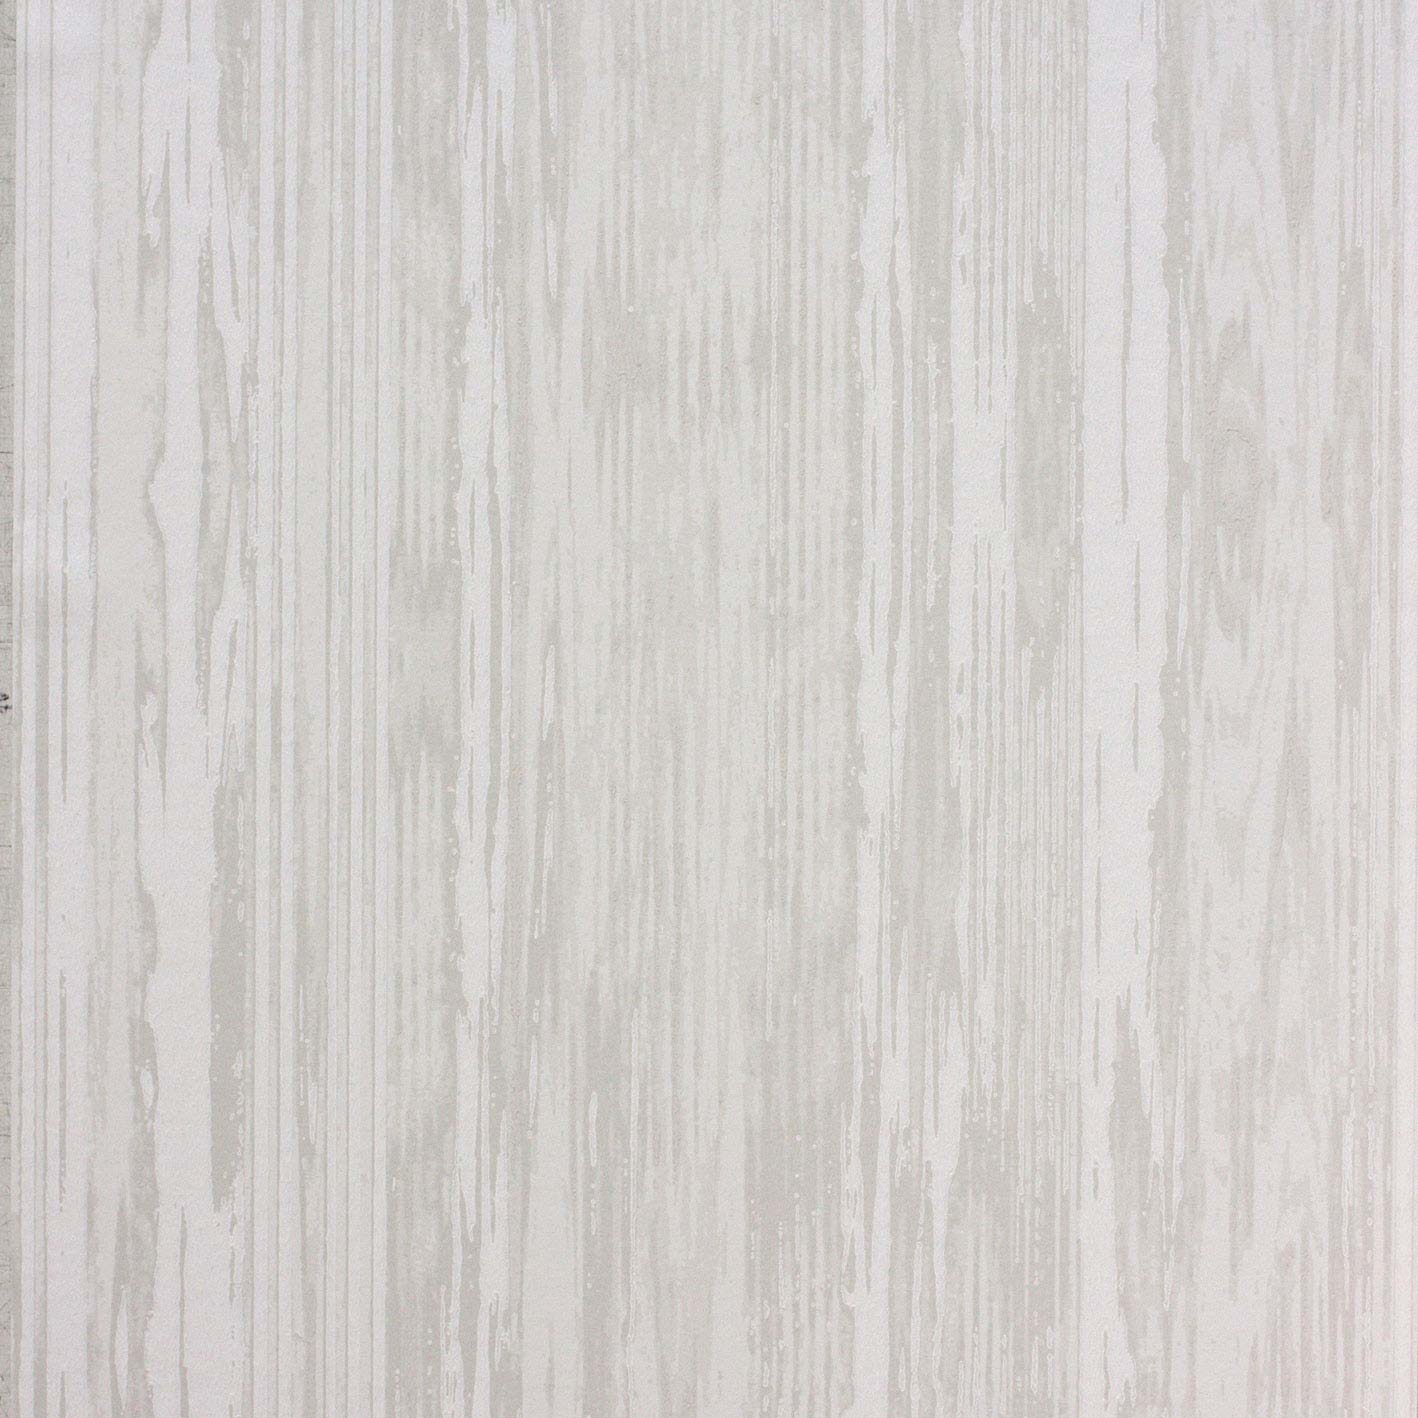 Nina Campbell Wallpaper - Les Rêves Pampelonne Ivory/White NCW4305-02